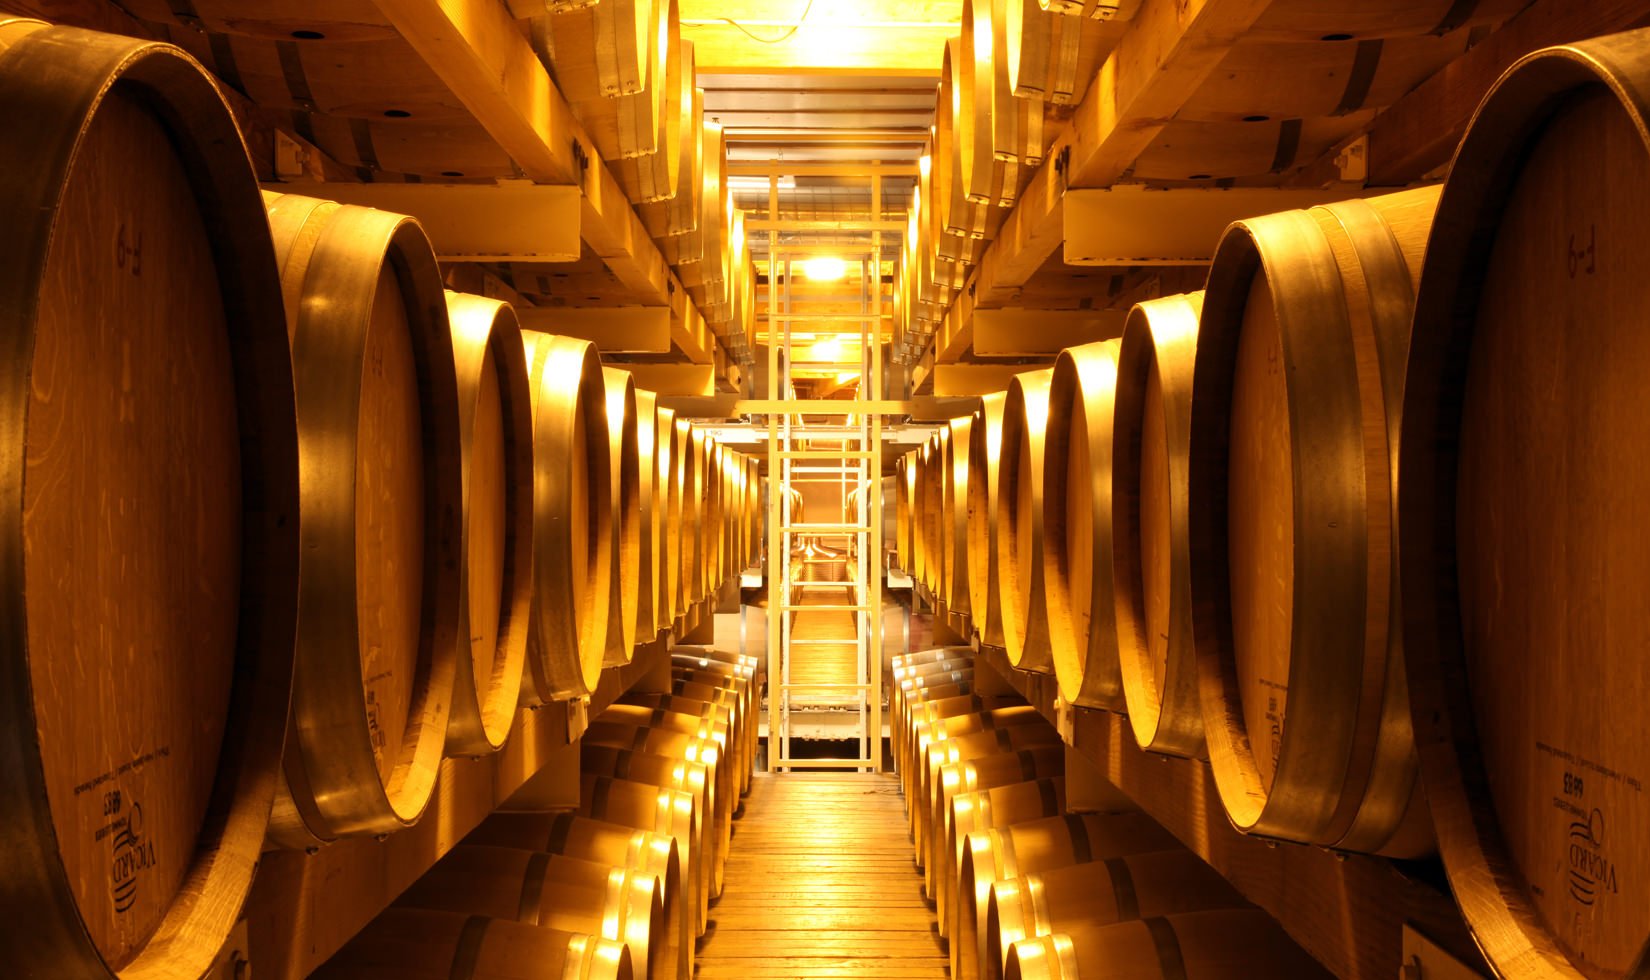 the wine barrel cellar at Jordan Winery